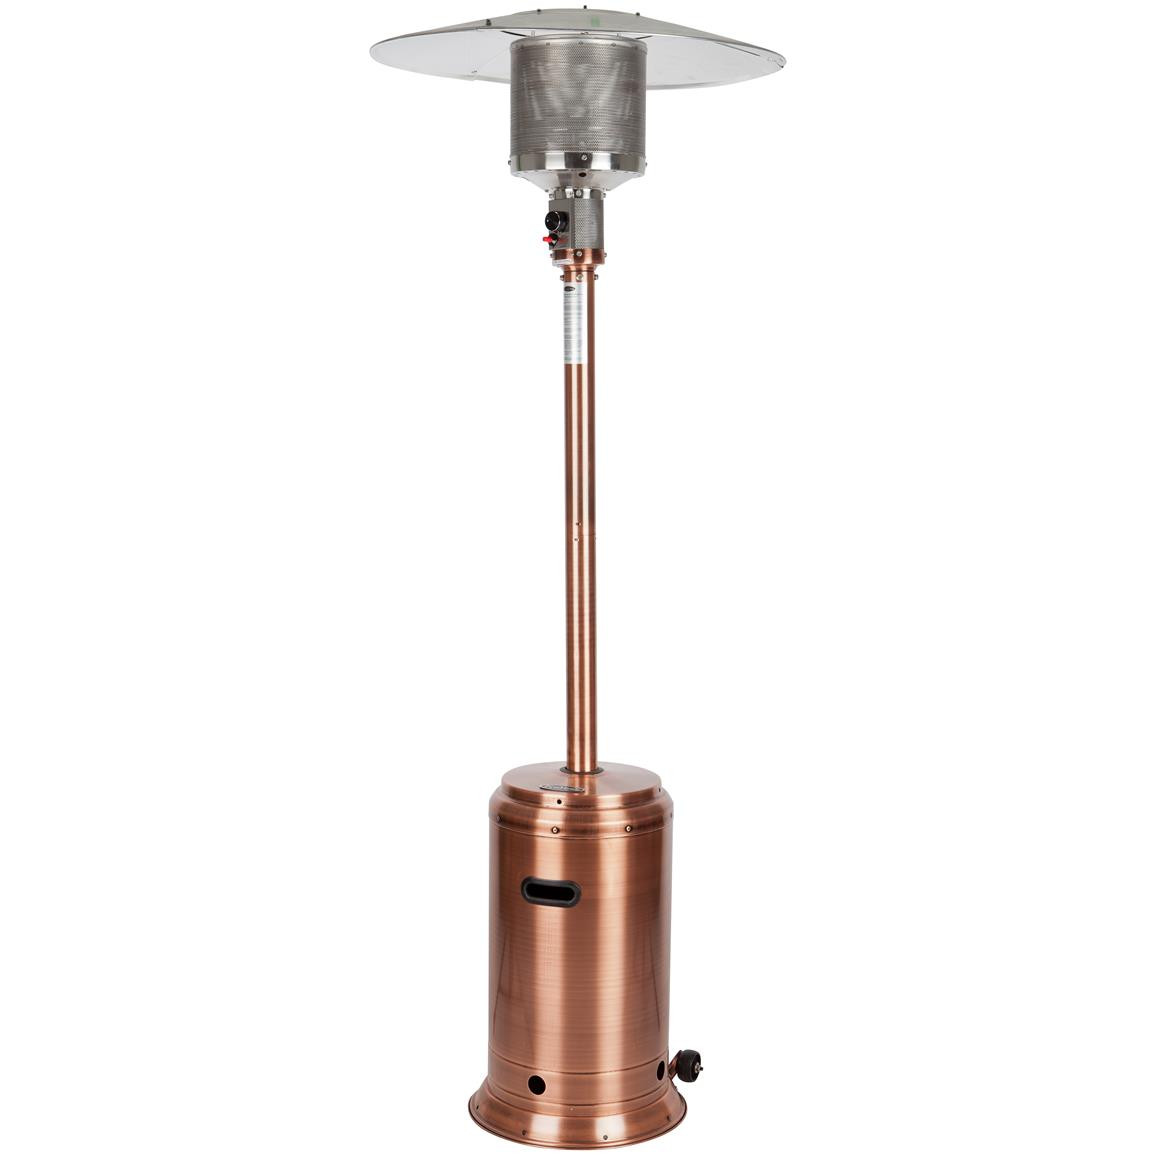 Best ideas about Fire Sense Patio Heater
. Save or Pin Fire Sense Copper mercial Patio Heater Fire Now.